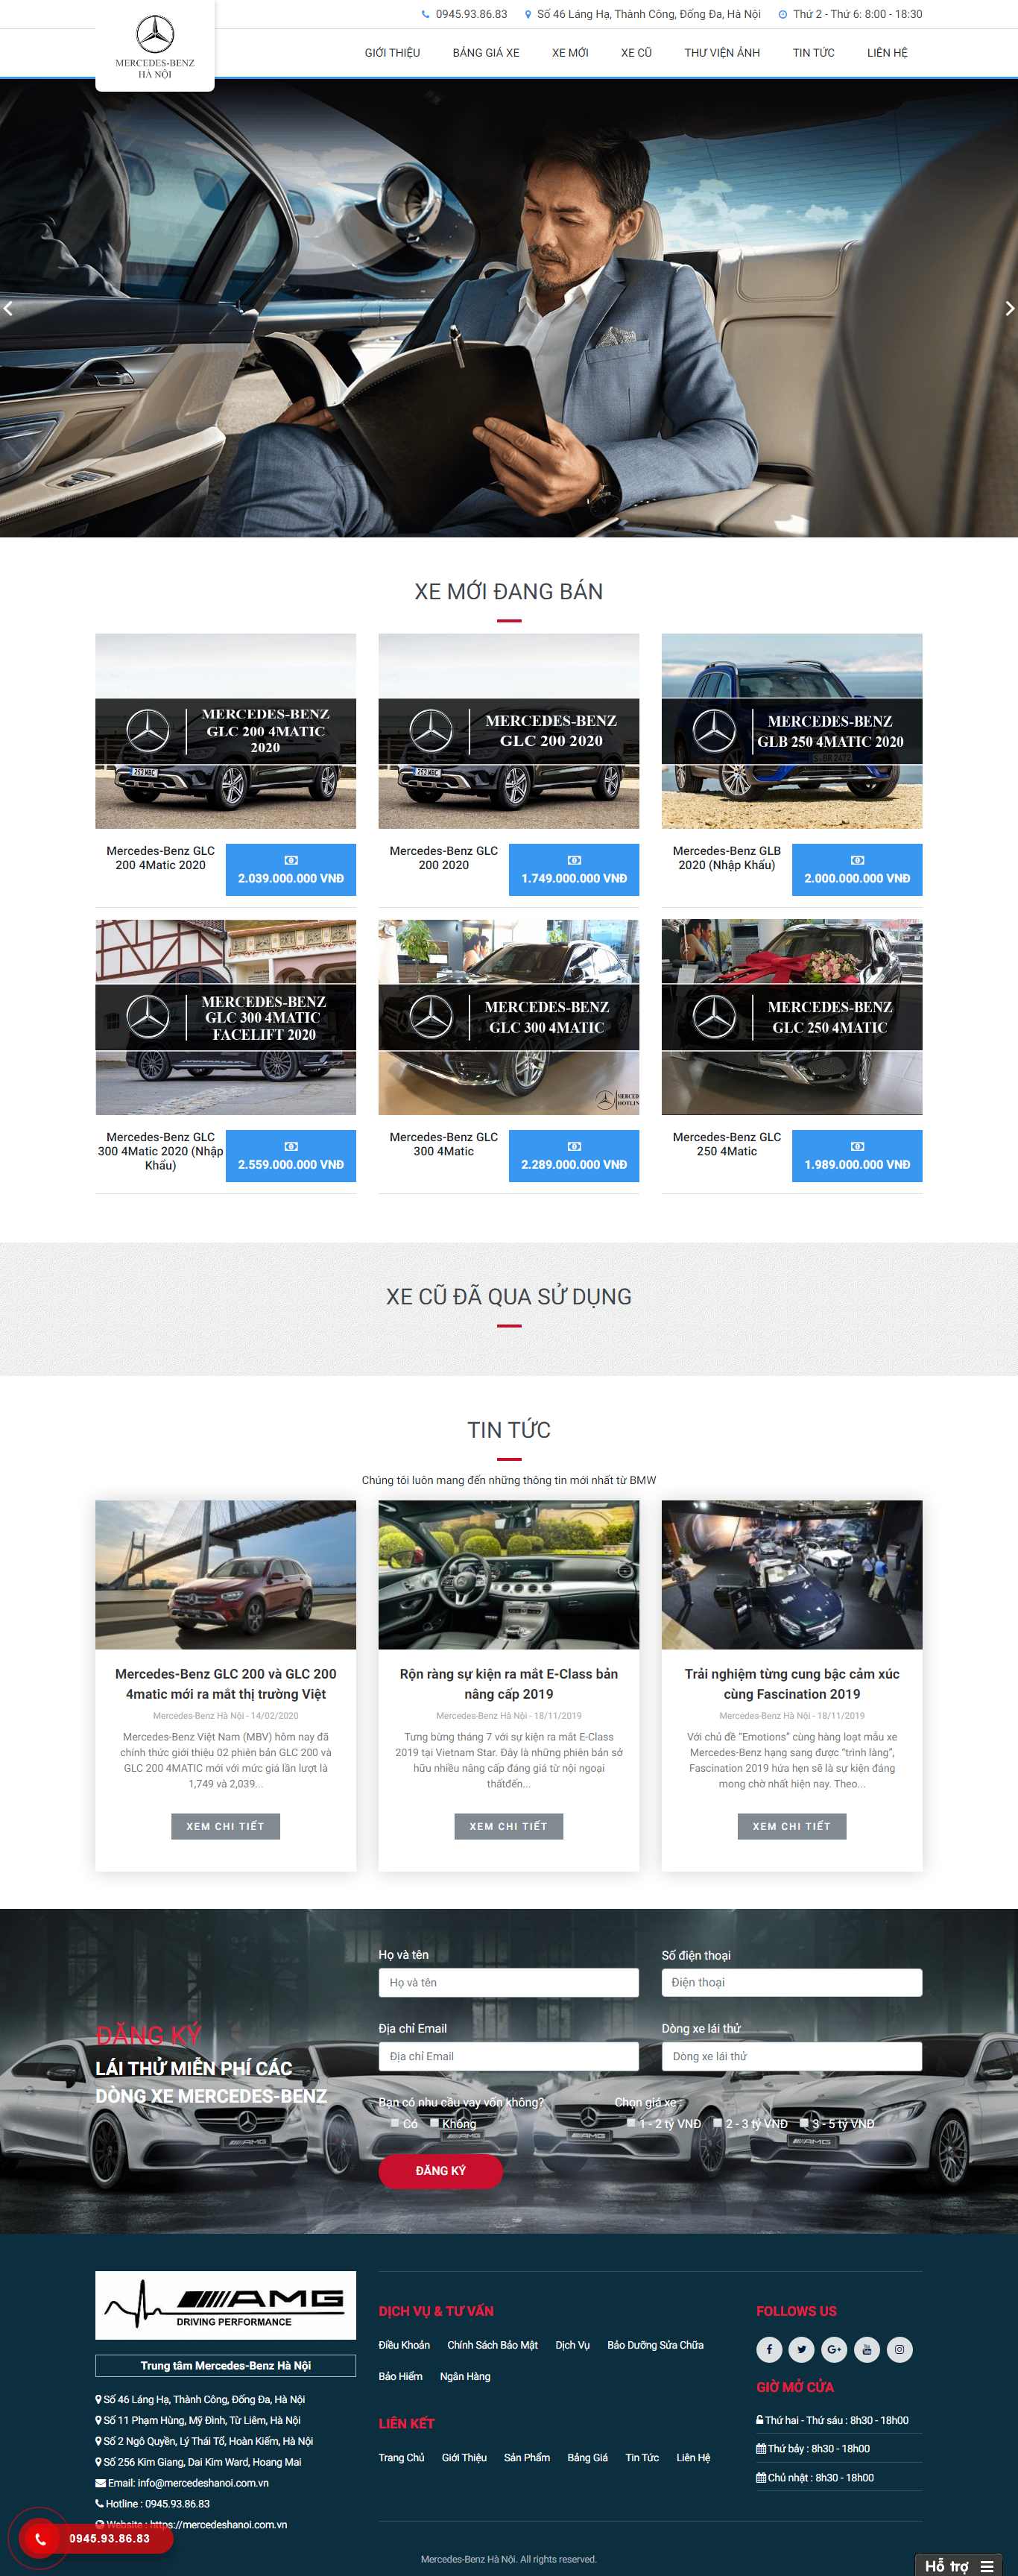 Thiết kế Website bán xe hơi - mercedeshanoi.com.vn